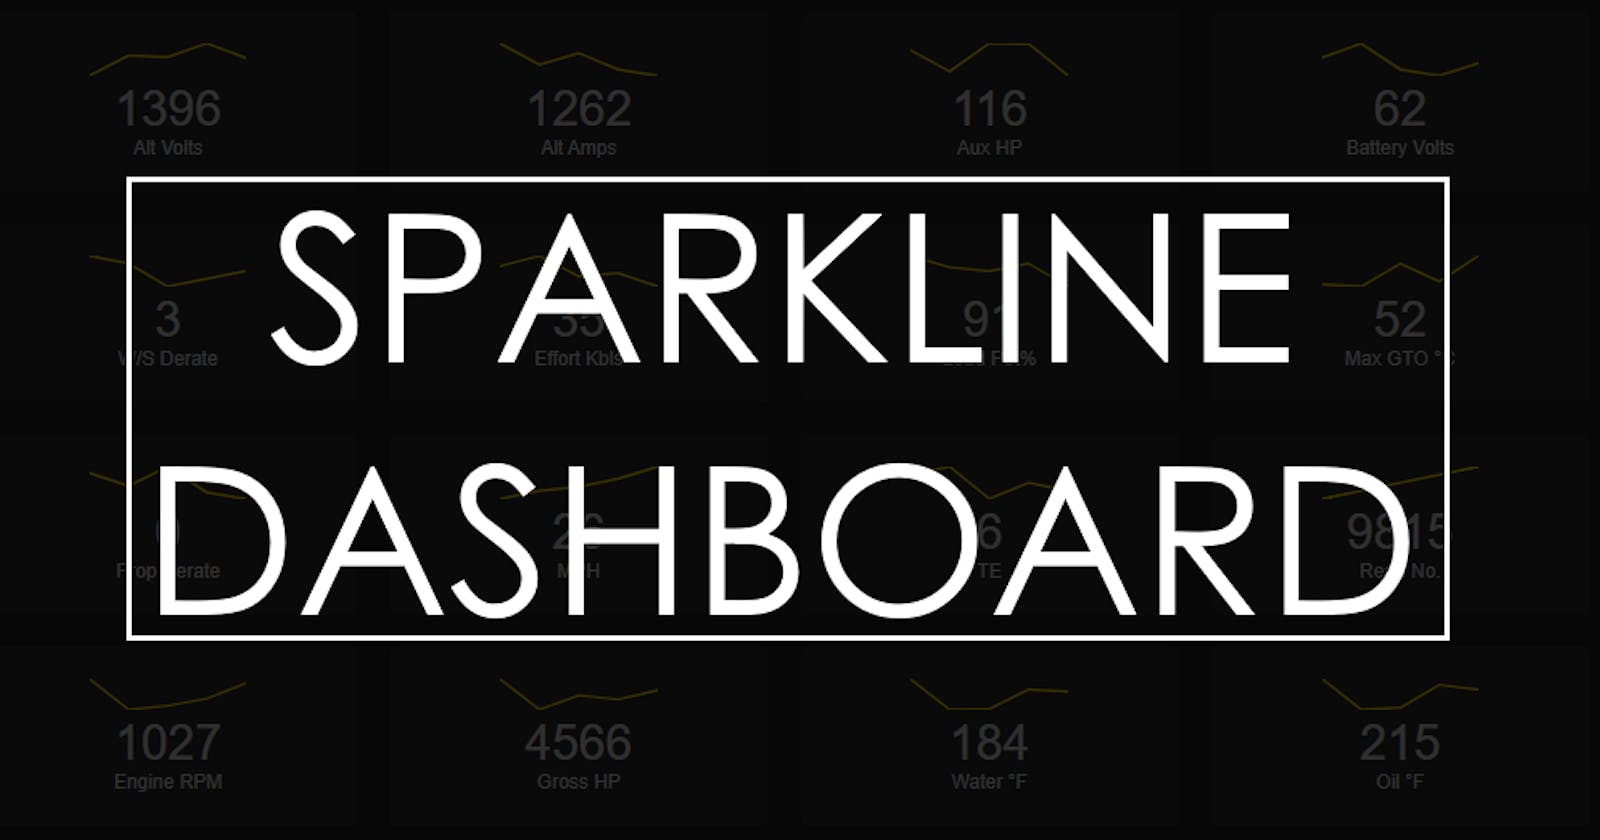 Building a Sparkline Dashboard